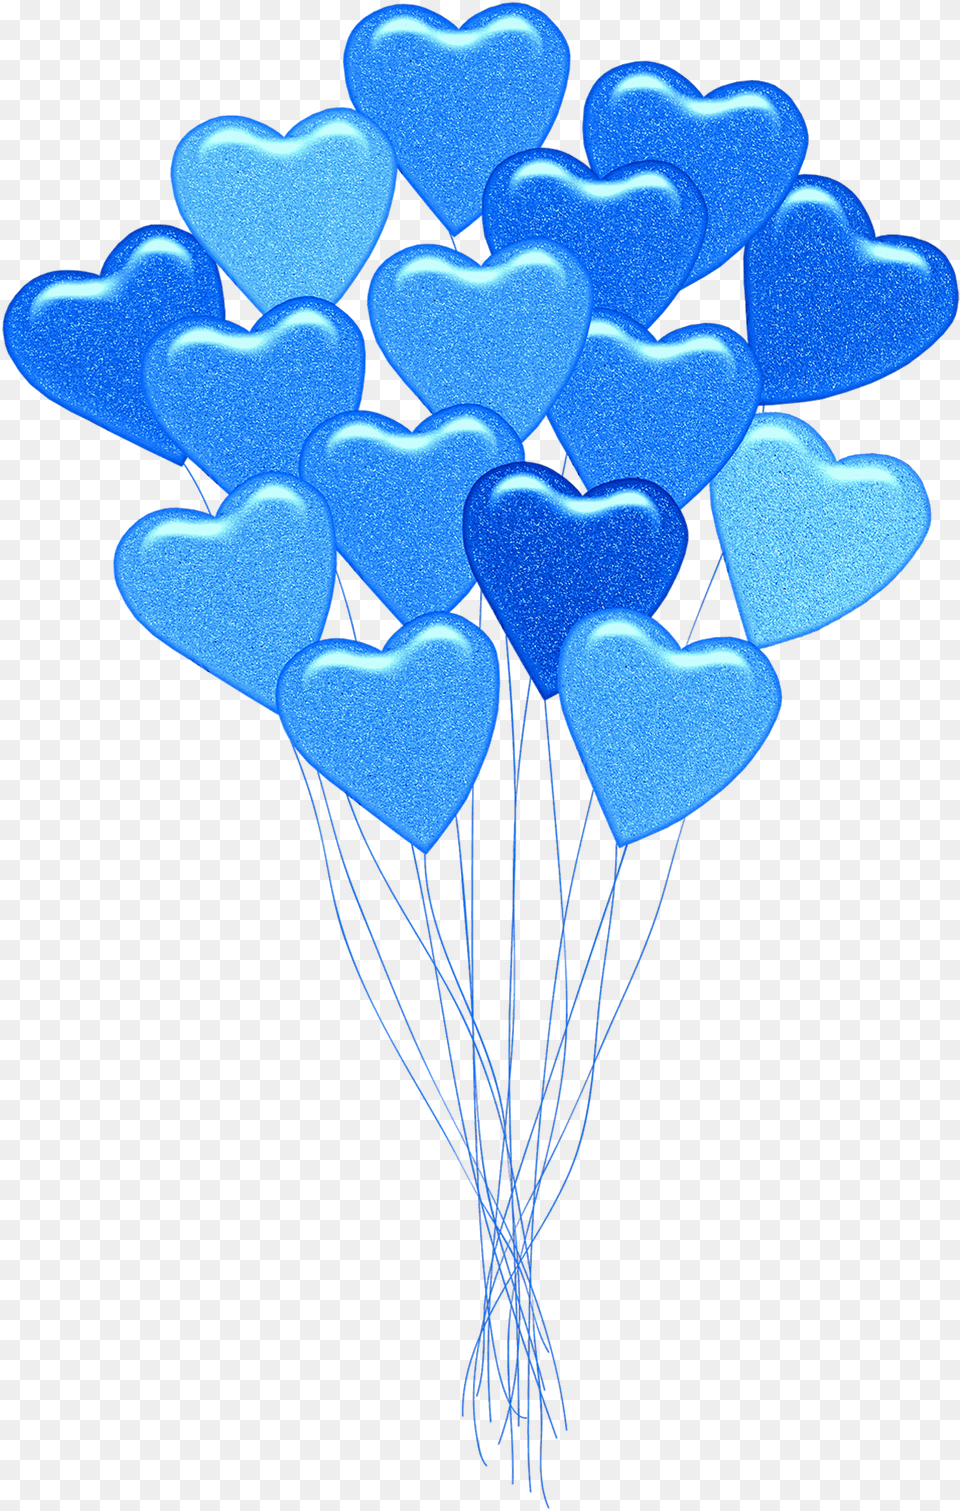 Blue Hearts Balo De, Plant, Balloon Png Image